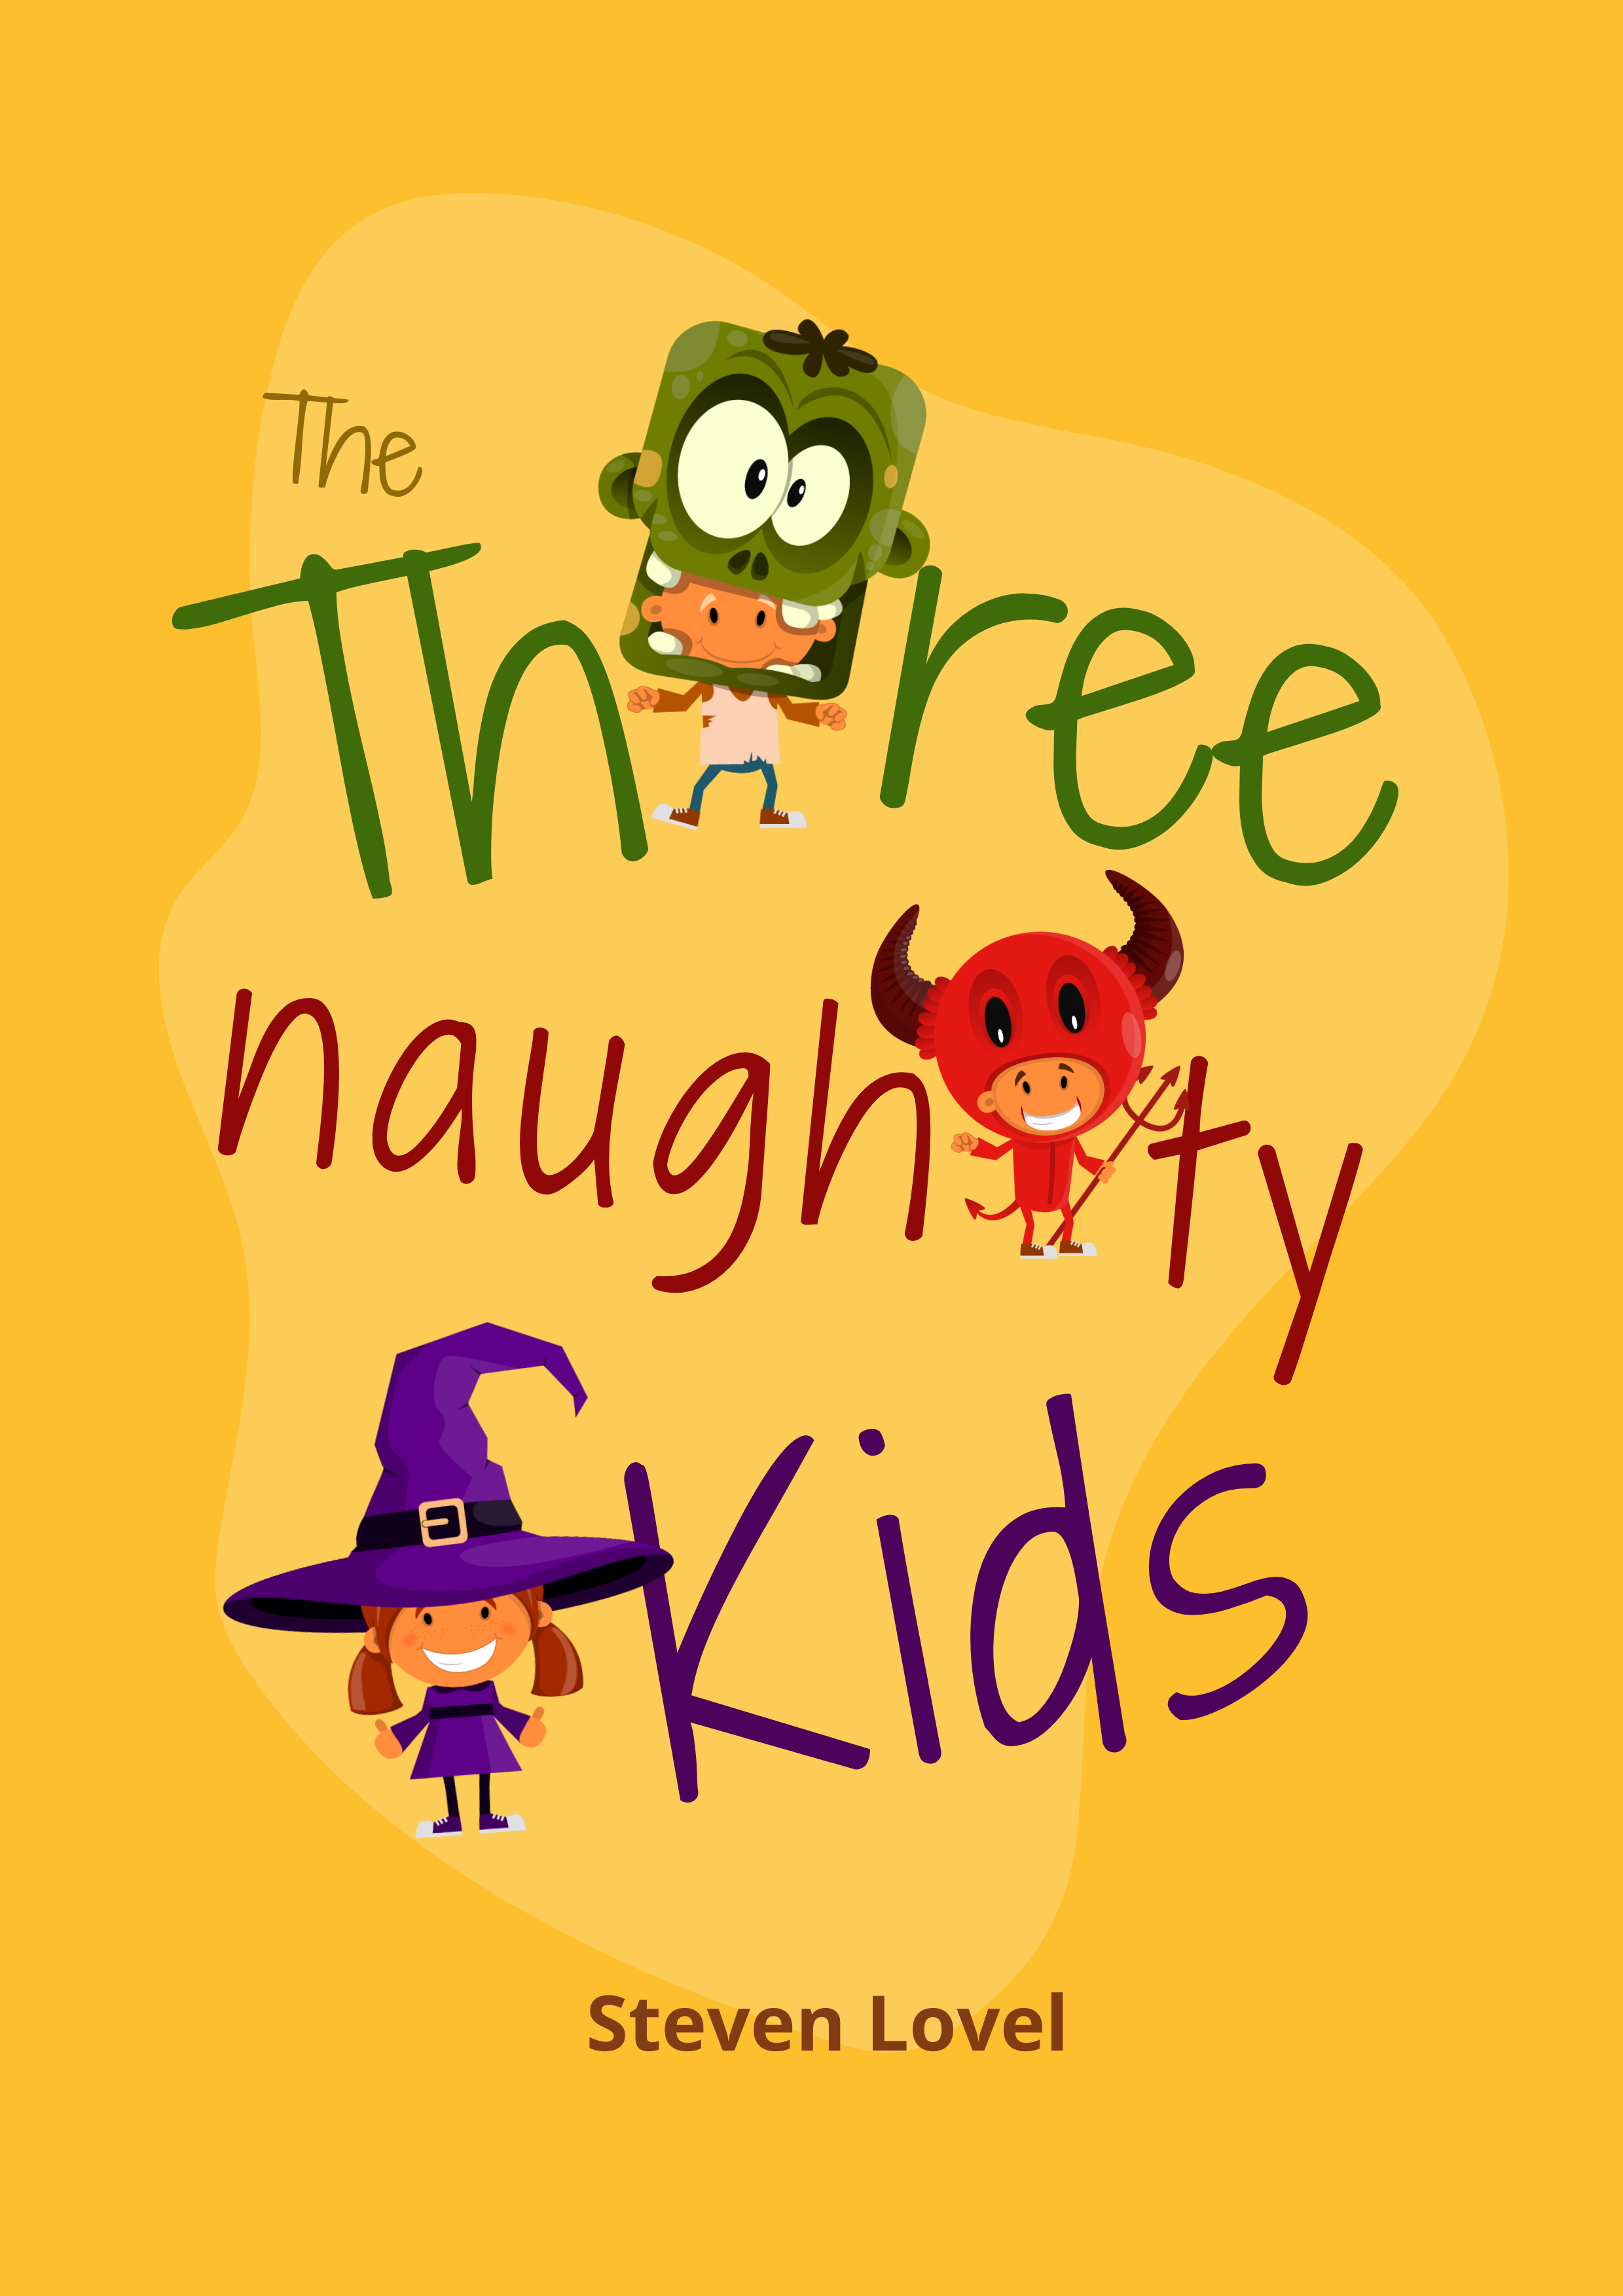 Children's Book Cover Template